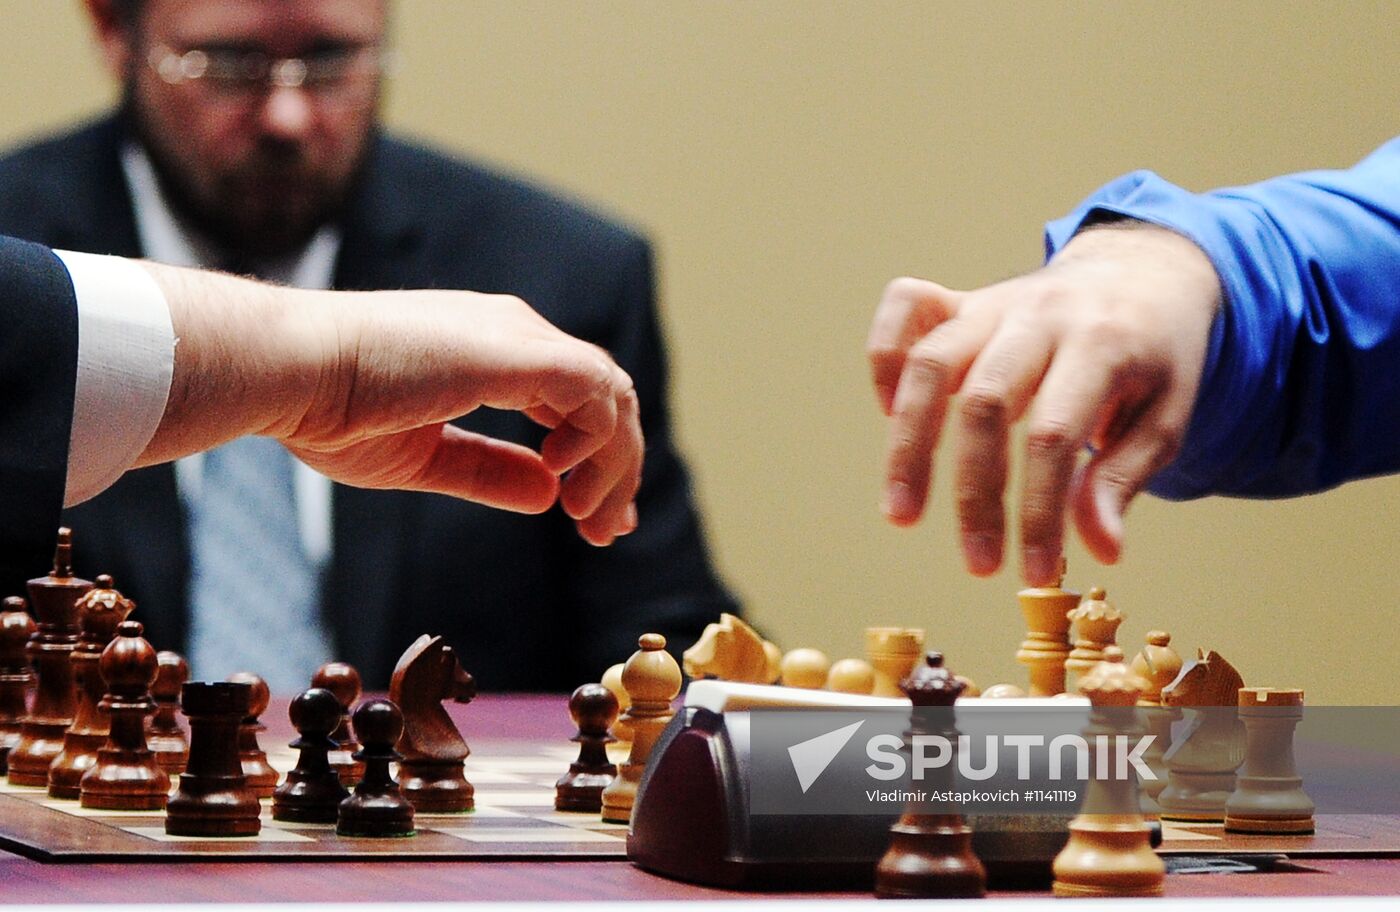 World chess championship match. Tie-break